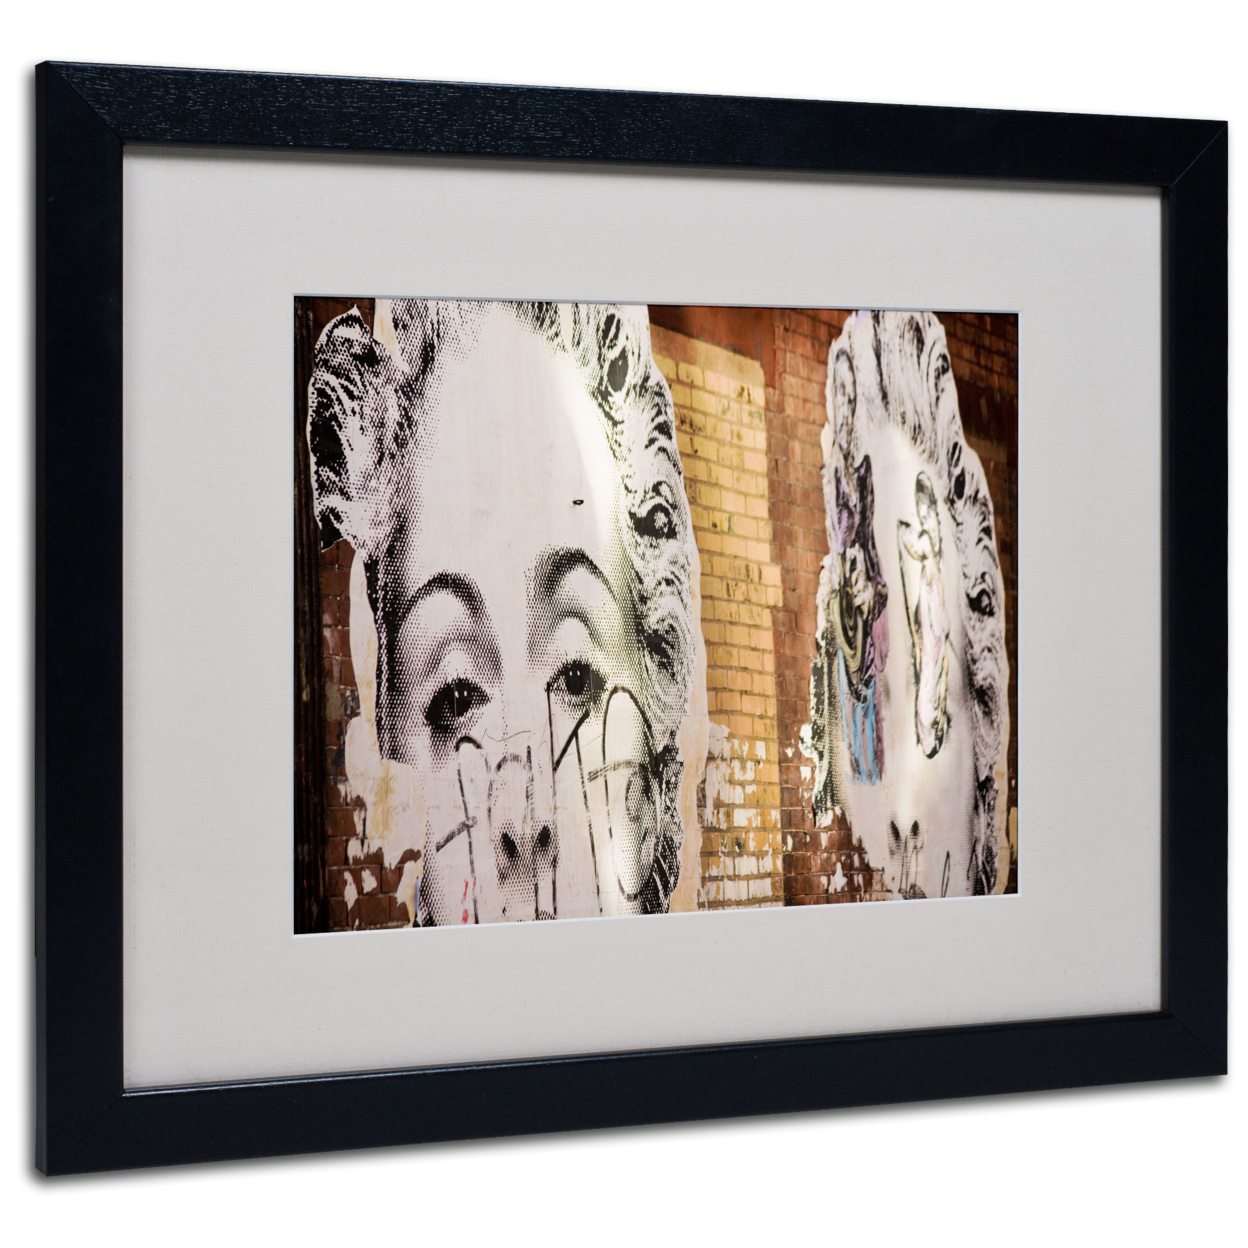 Yale Gurney 'Pop Art Madonna Meatpacking' Black Wooden Framed Art 18 X 22 Inches